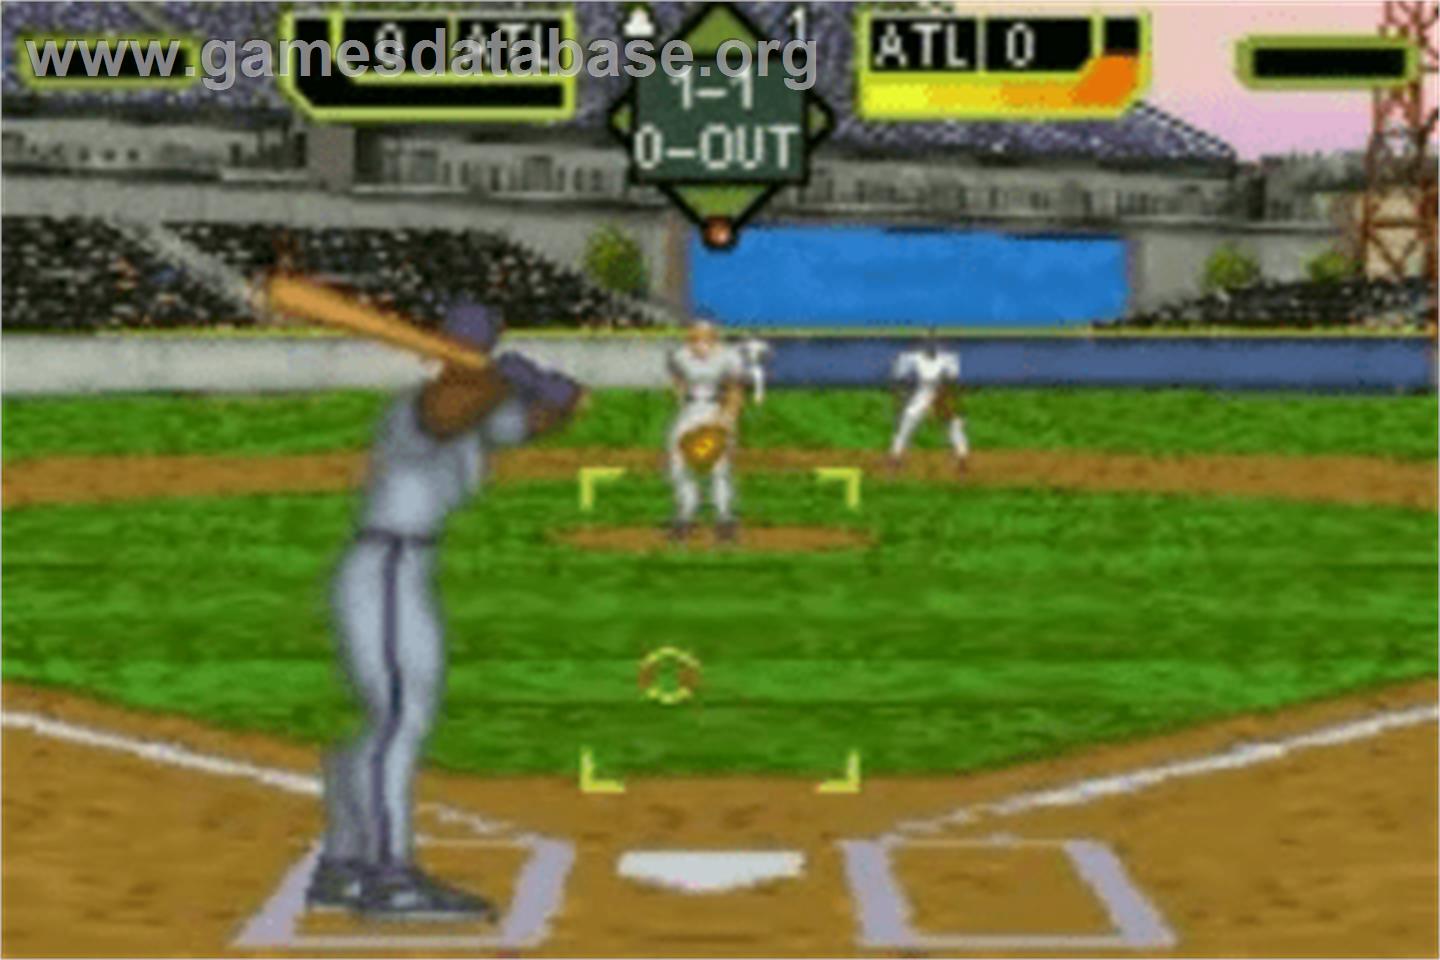 Crushed Baseball - Nintendo Game Boy Advance - Artwork - In Game